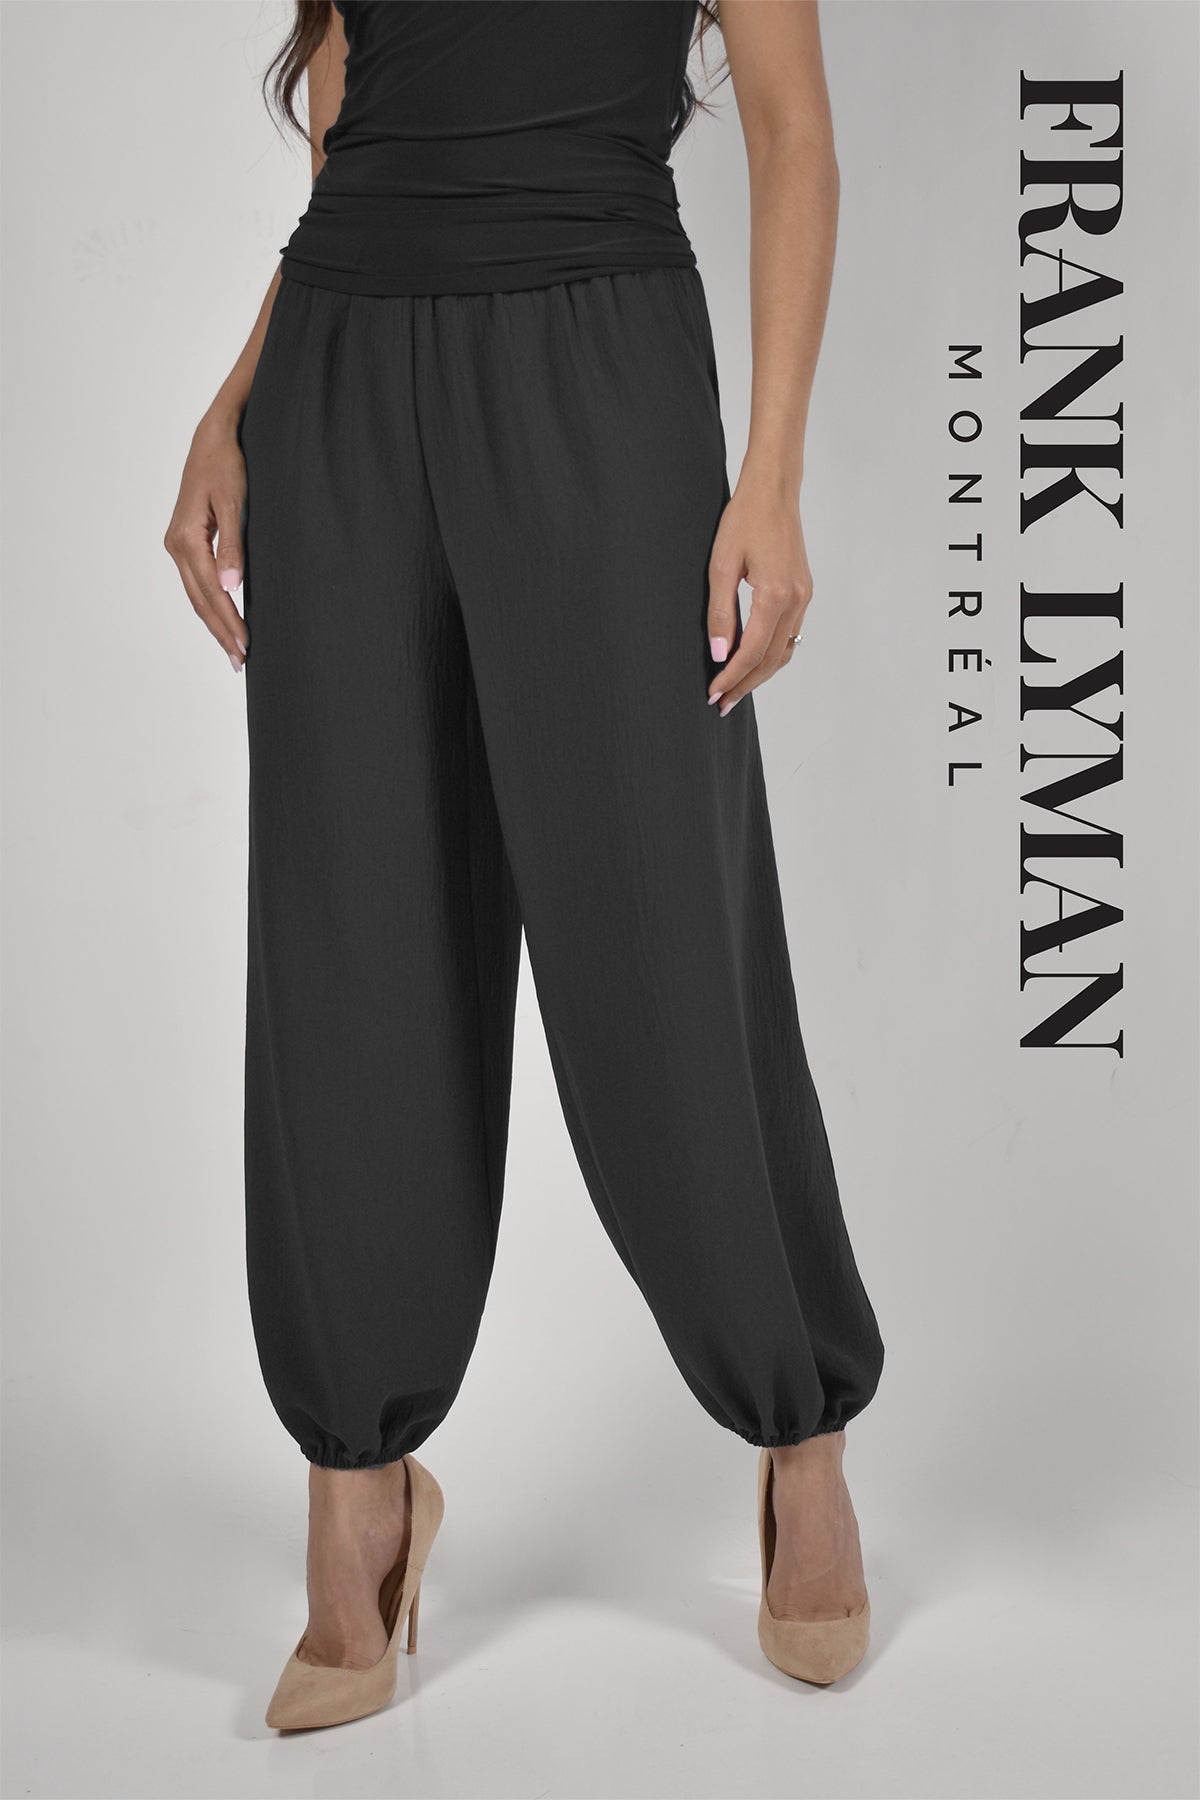 Frank Lyman Montreal Pants-Buy Frank Lyman Montreal Pants Online-Frank Lyman Montreal Spring 2022 Collection-Frank Lyman Montreal Jeans